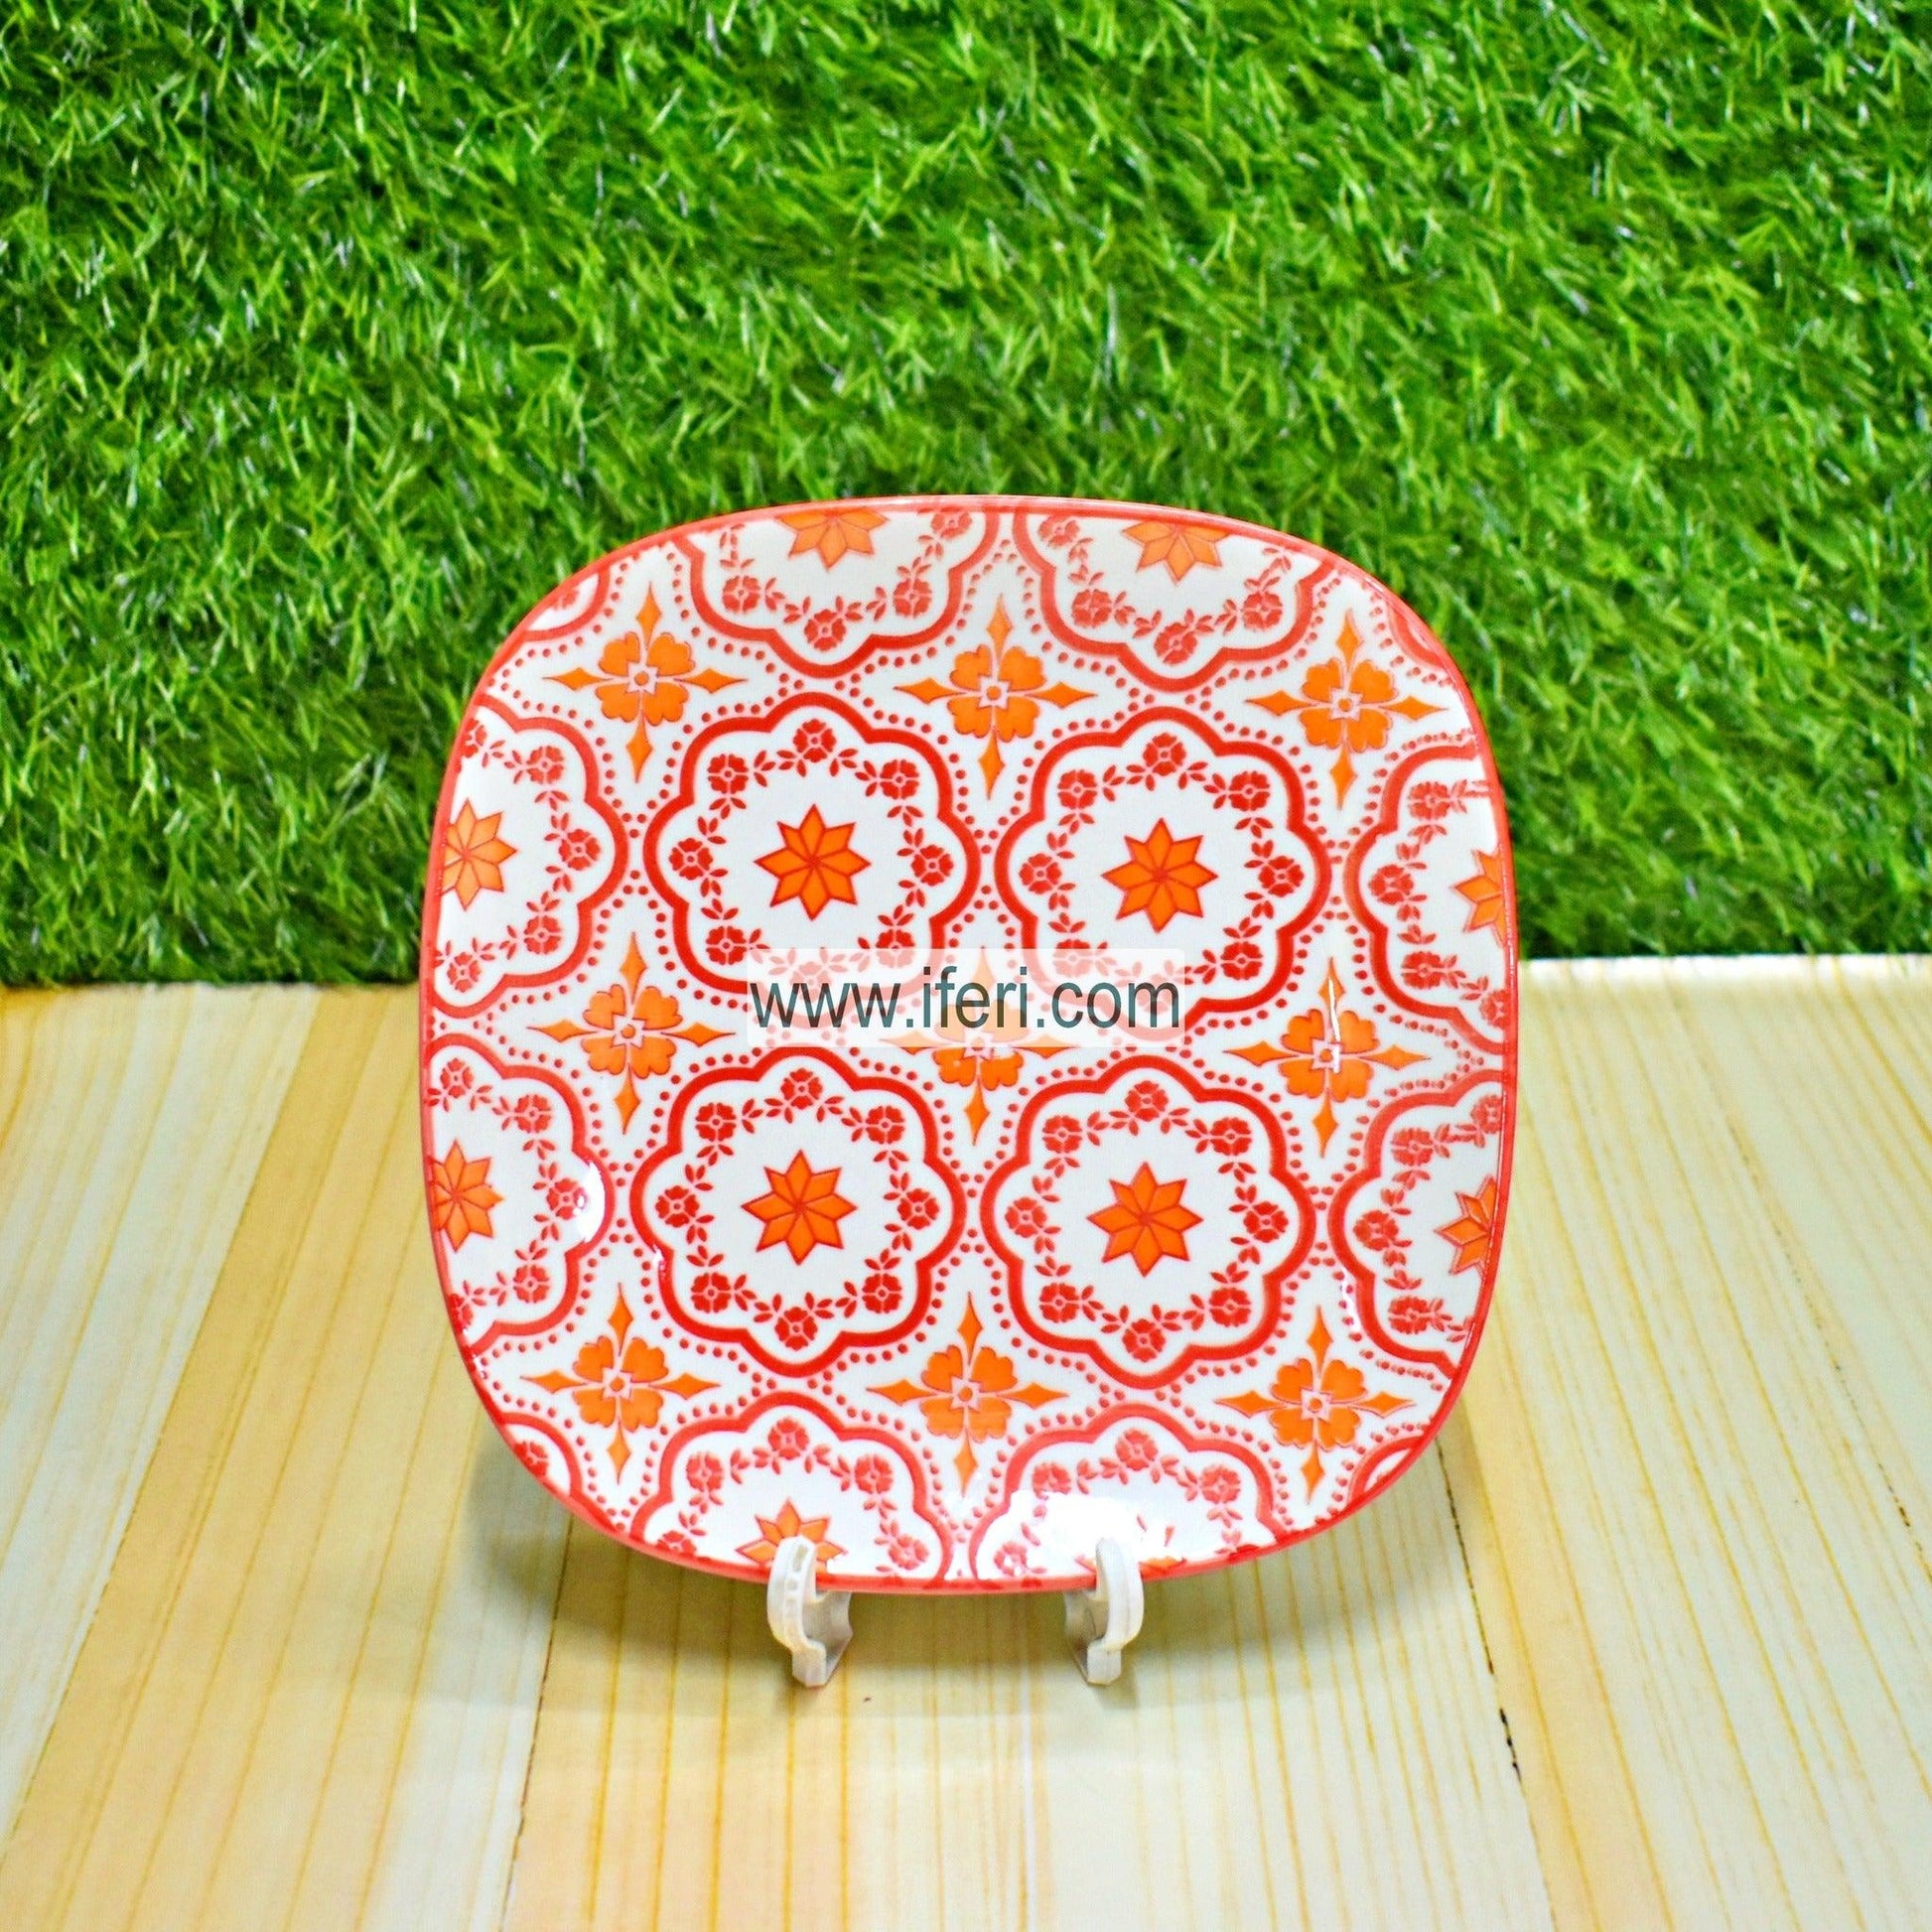 8 Inch Ceramic Half Plate SY0073 Price in Bangladesh - iferi.com